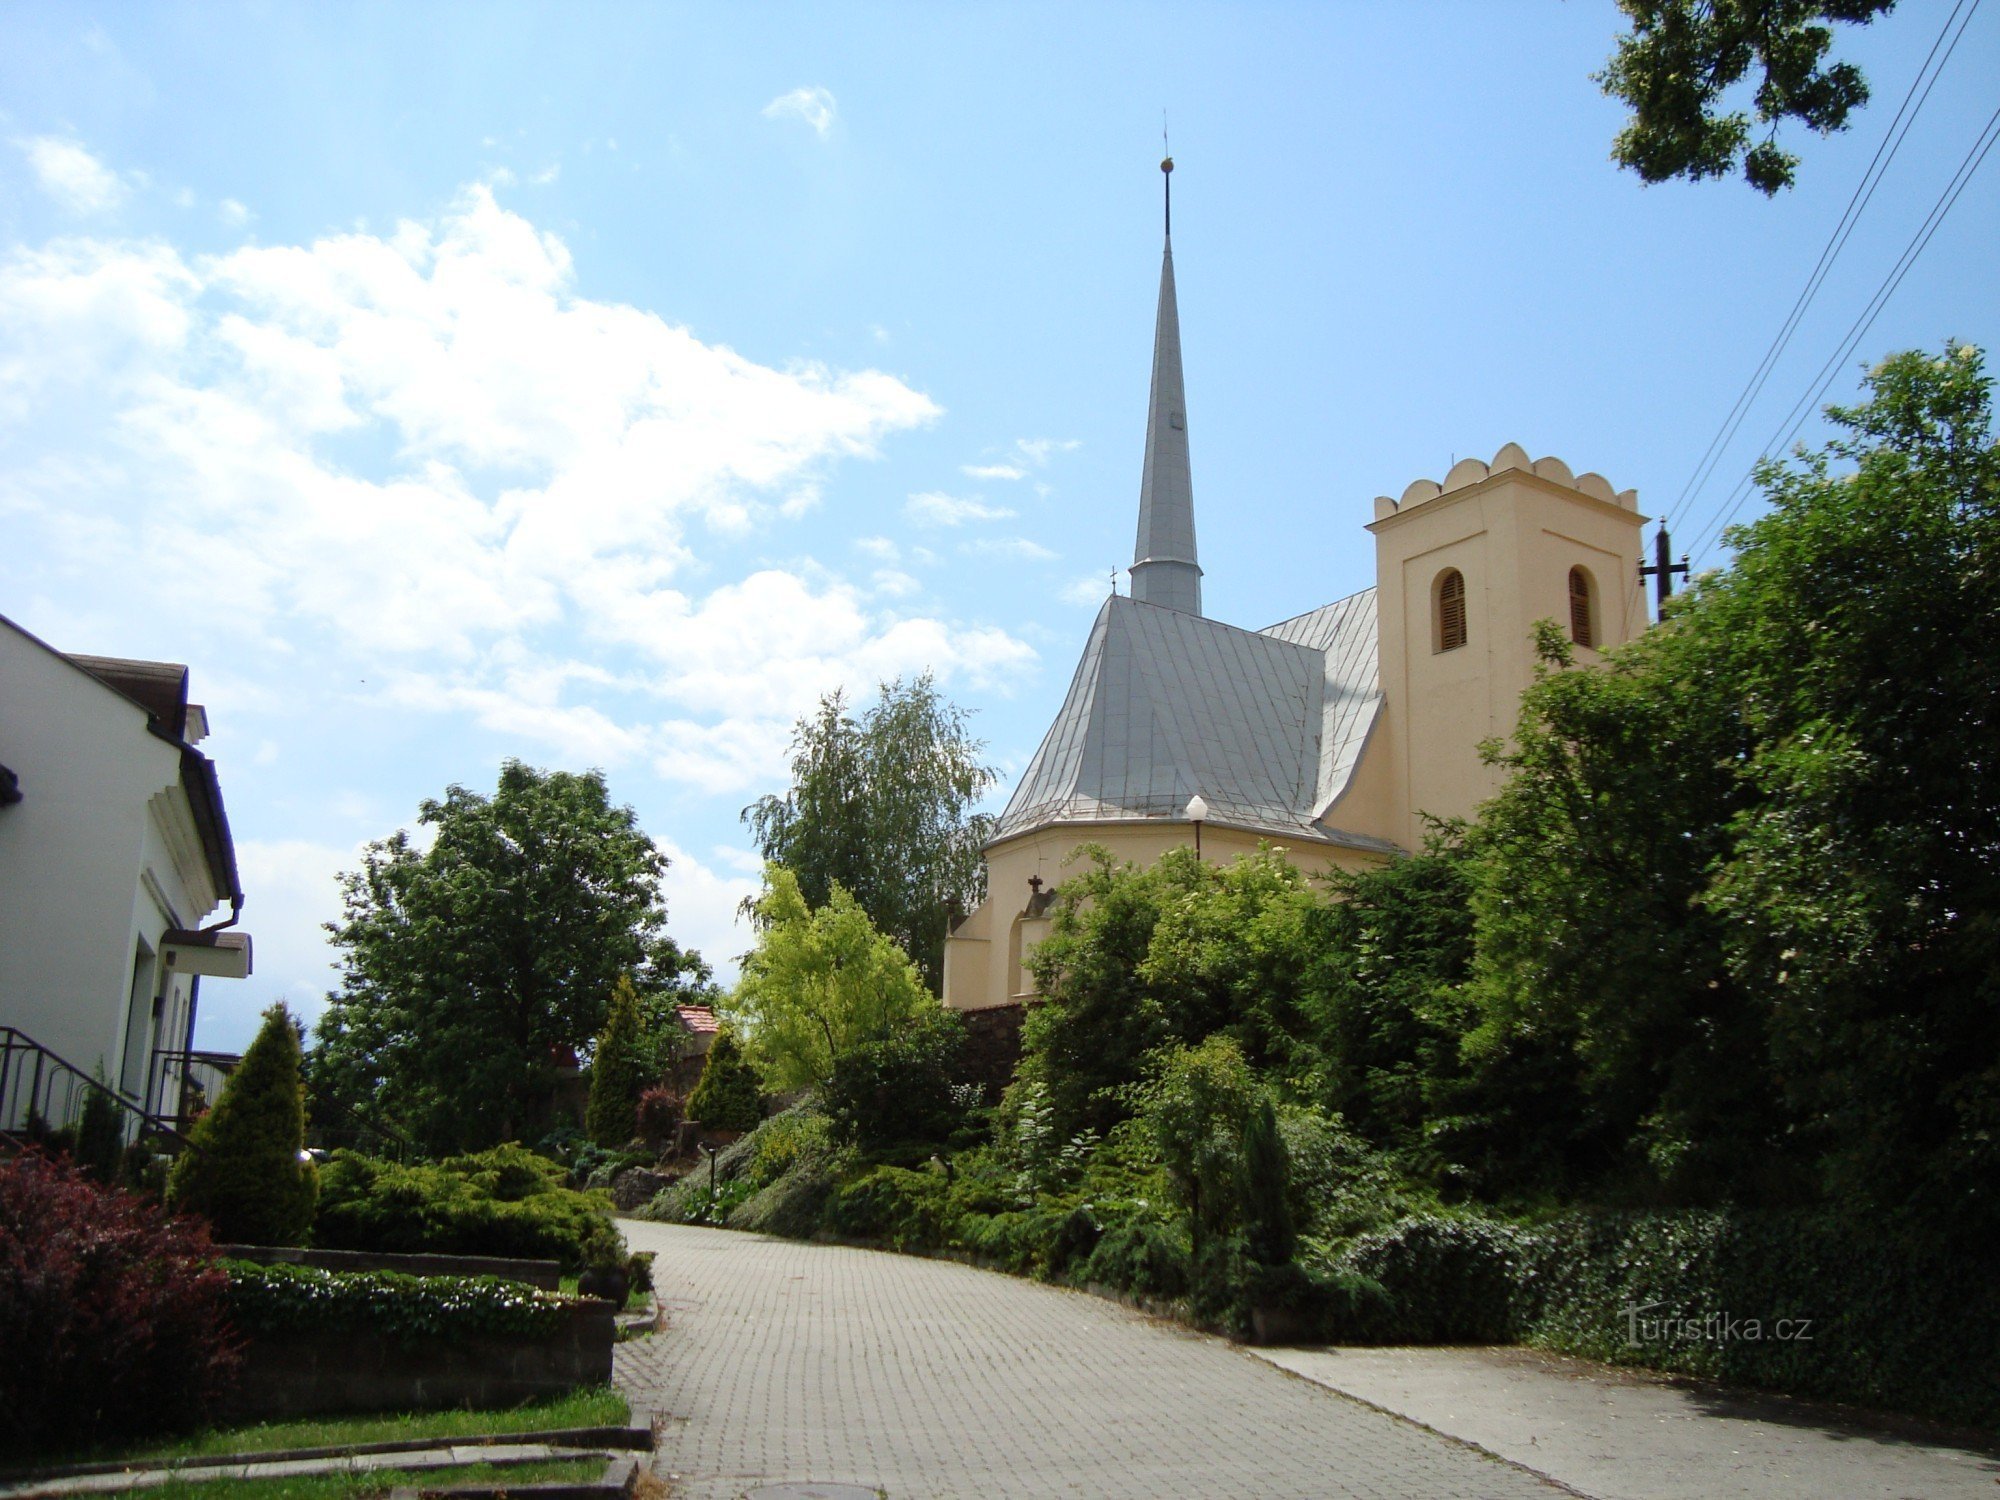 Slavonín - biserica parohială Sf. Andrei - Foto: Ulrych Mir.